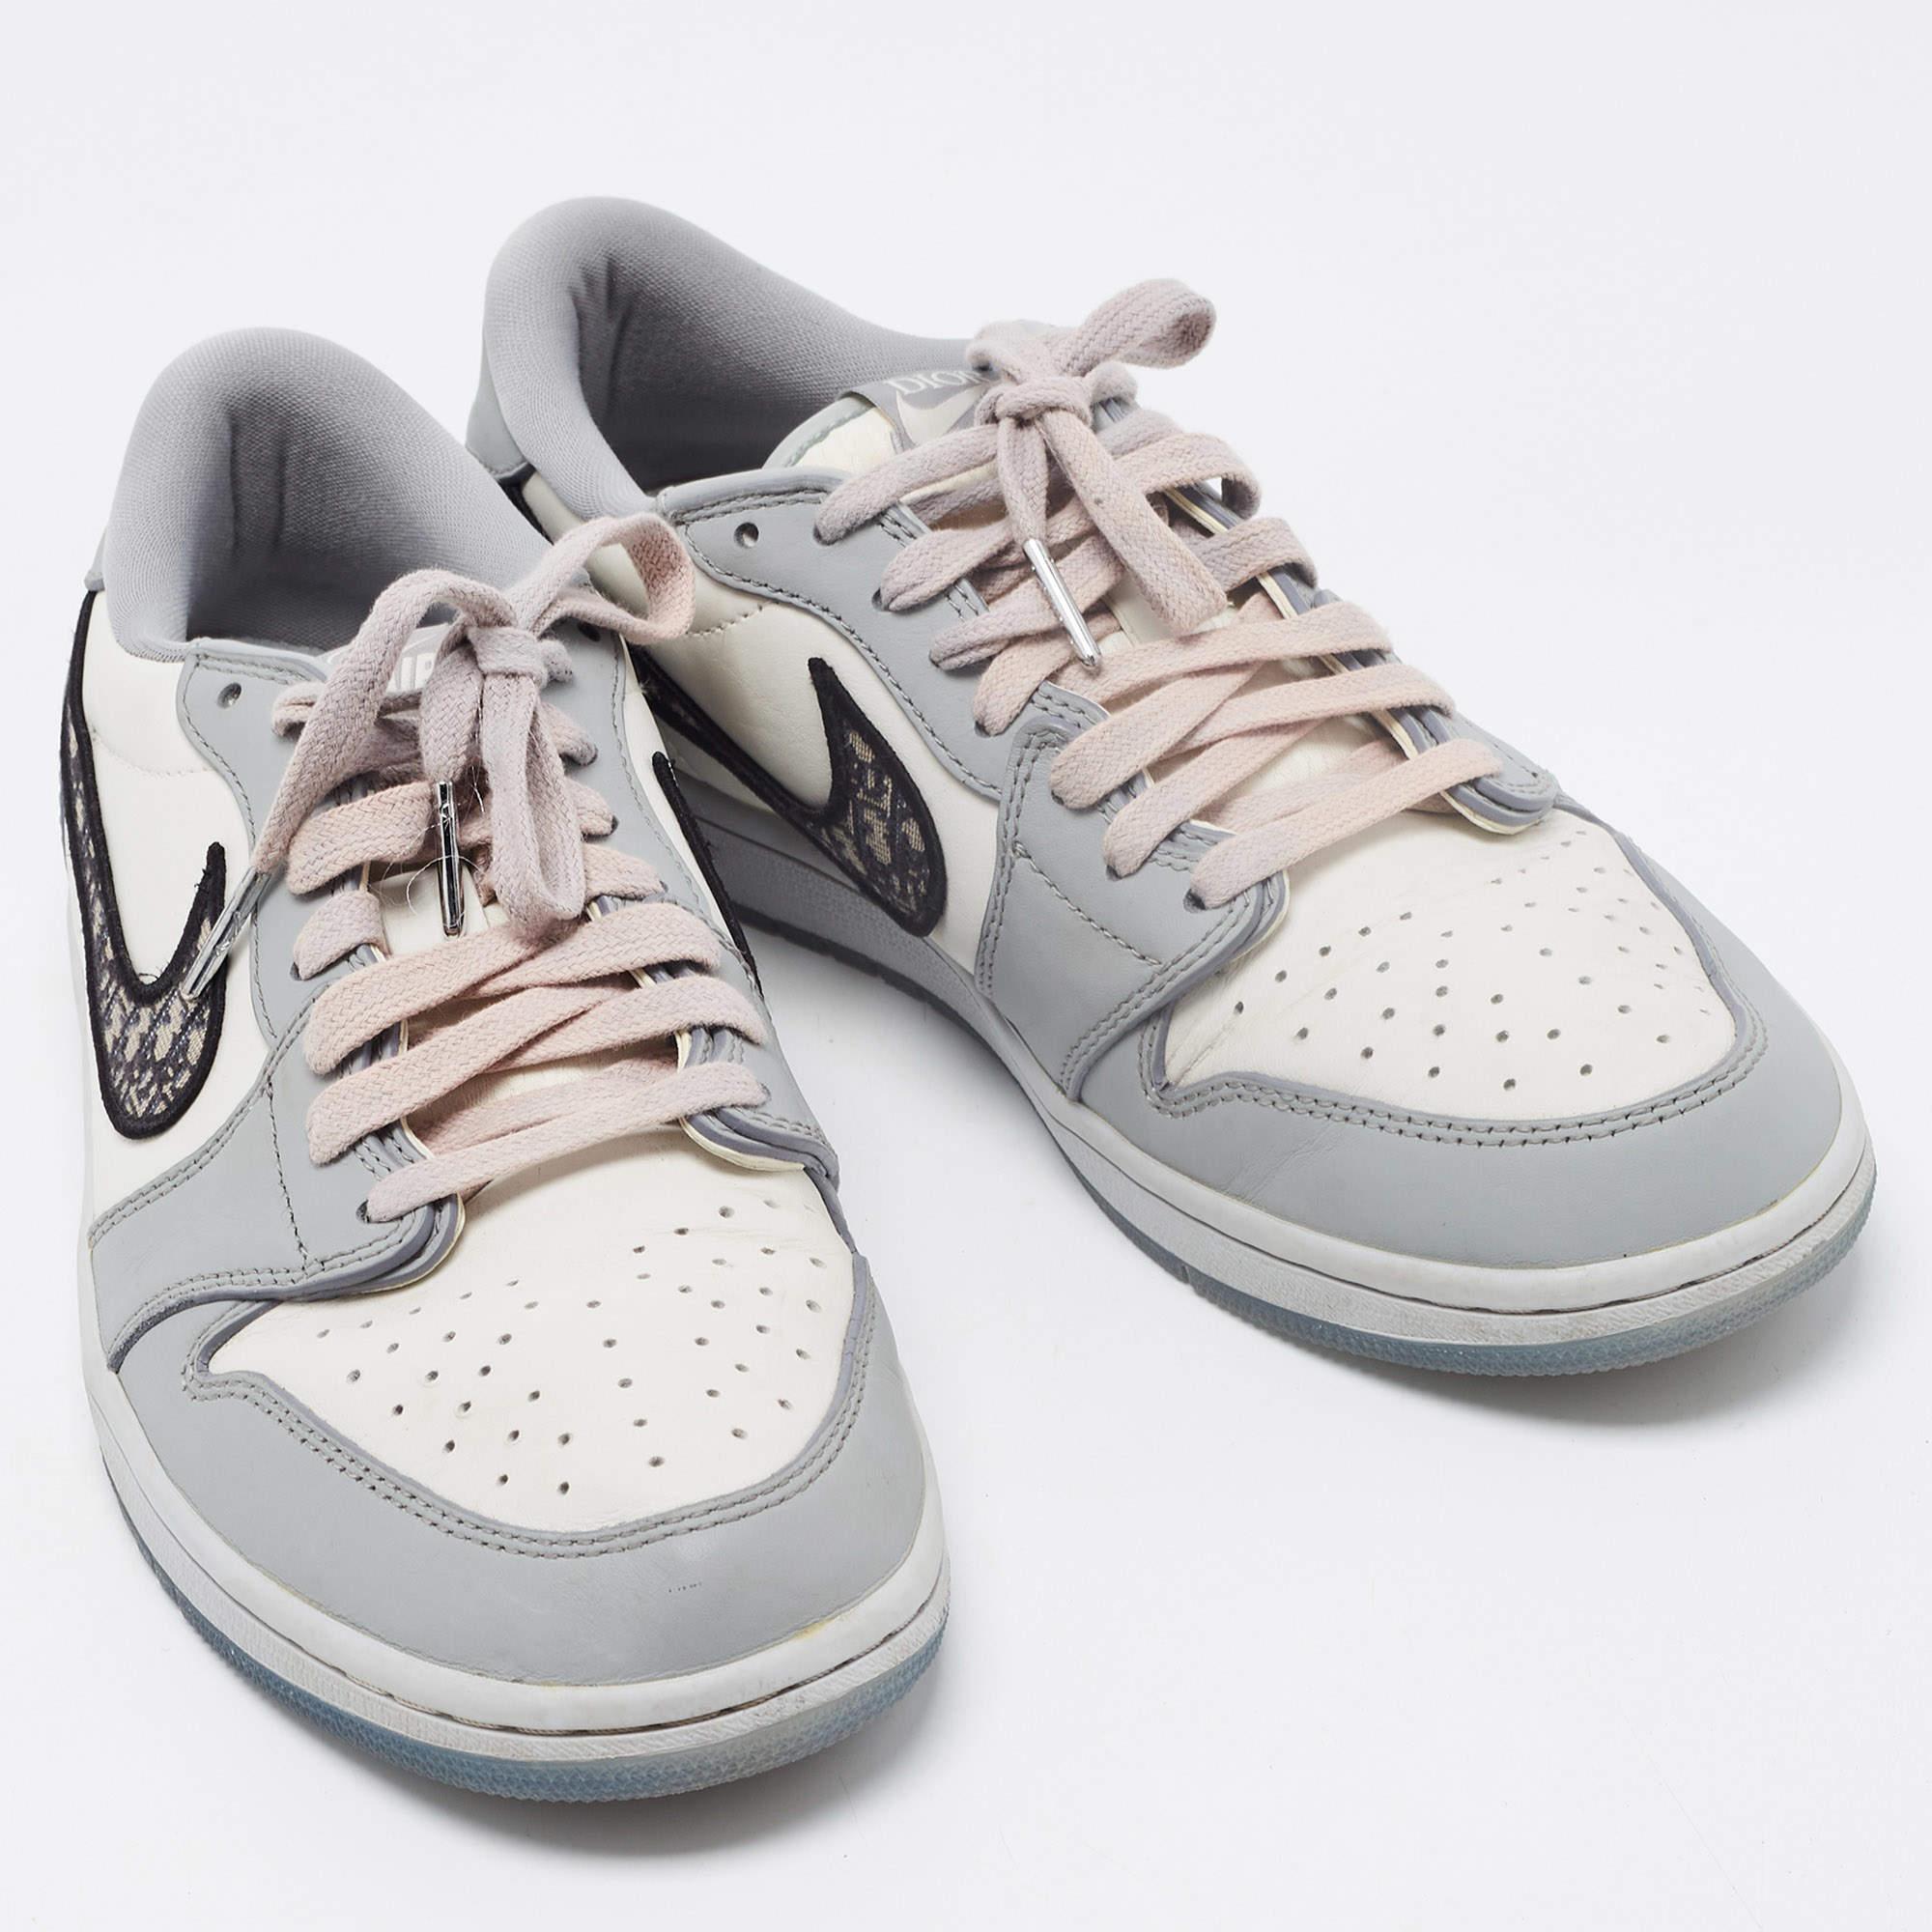 Dior x Jordan Grey/White Leather Jordan 1 Low Top Sneakers Size 44 1